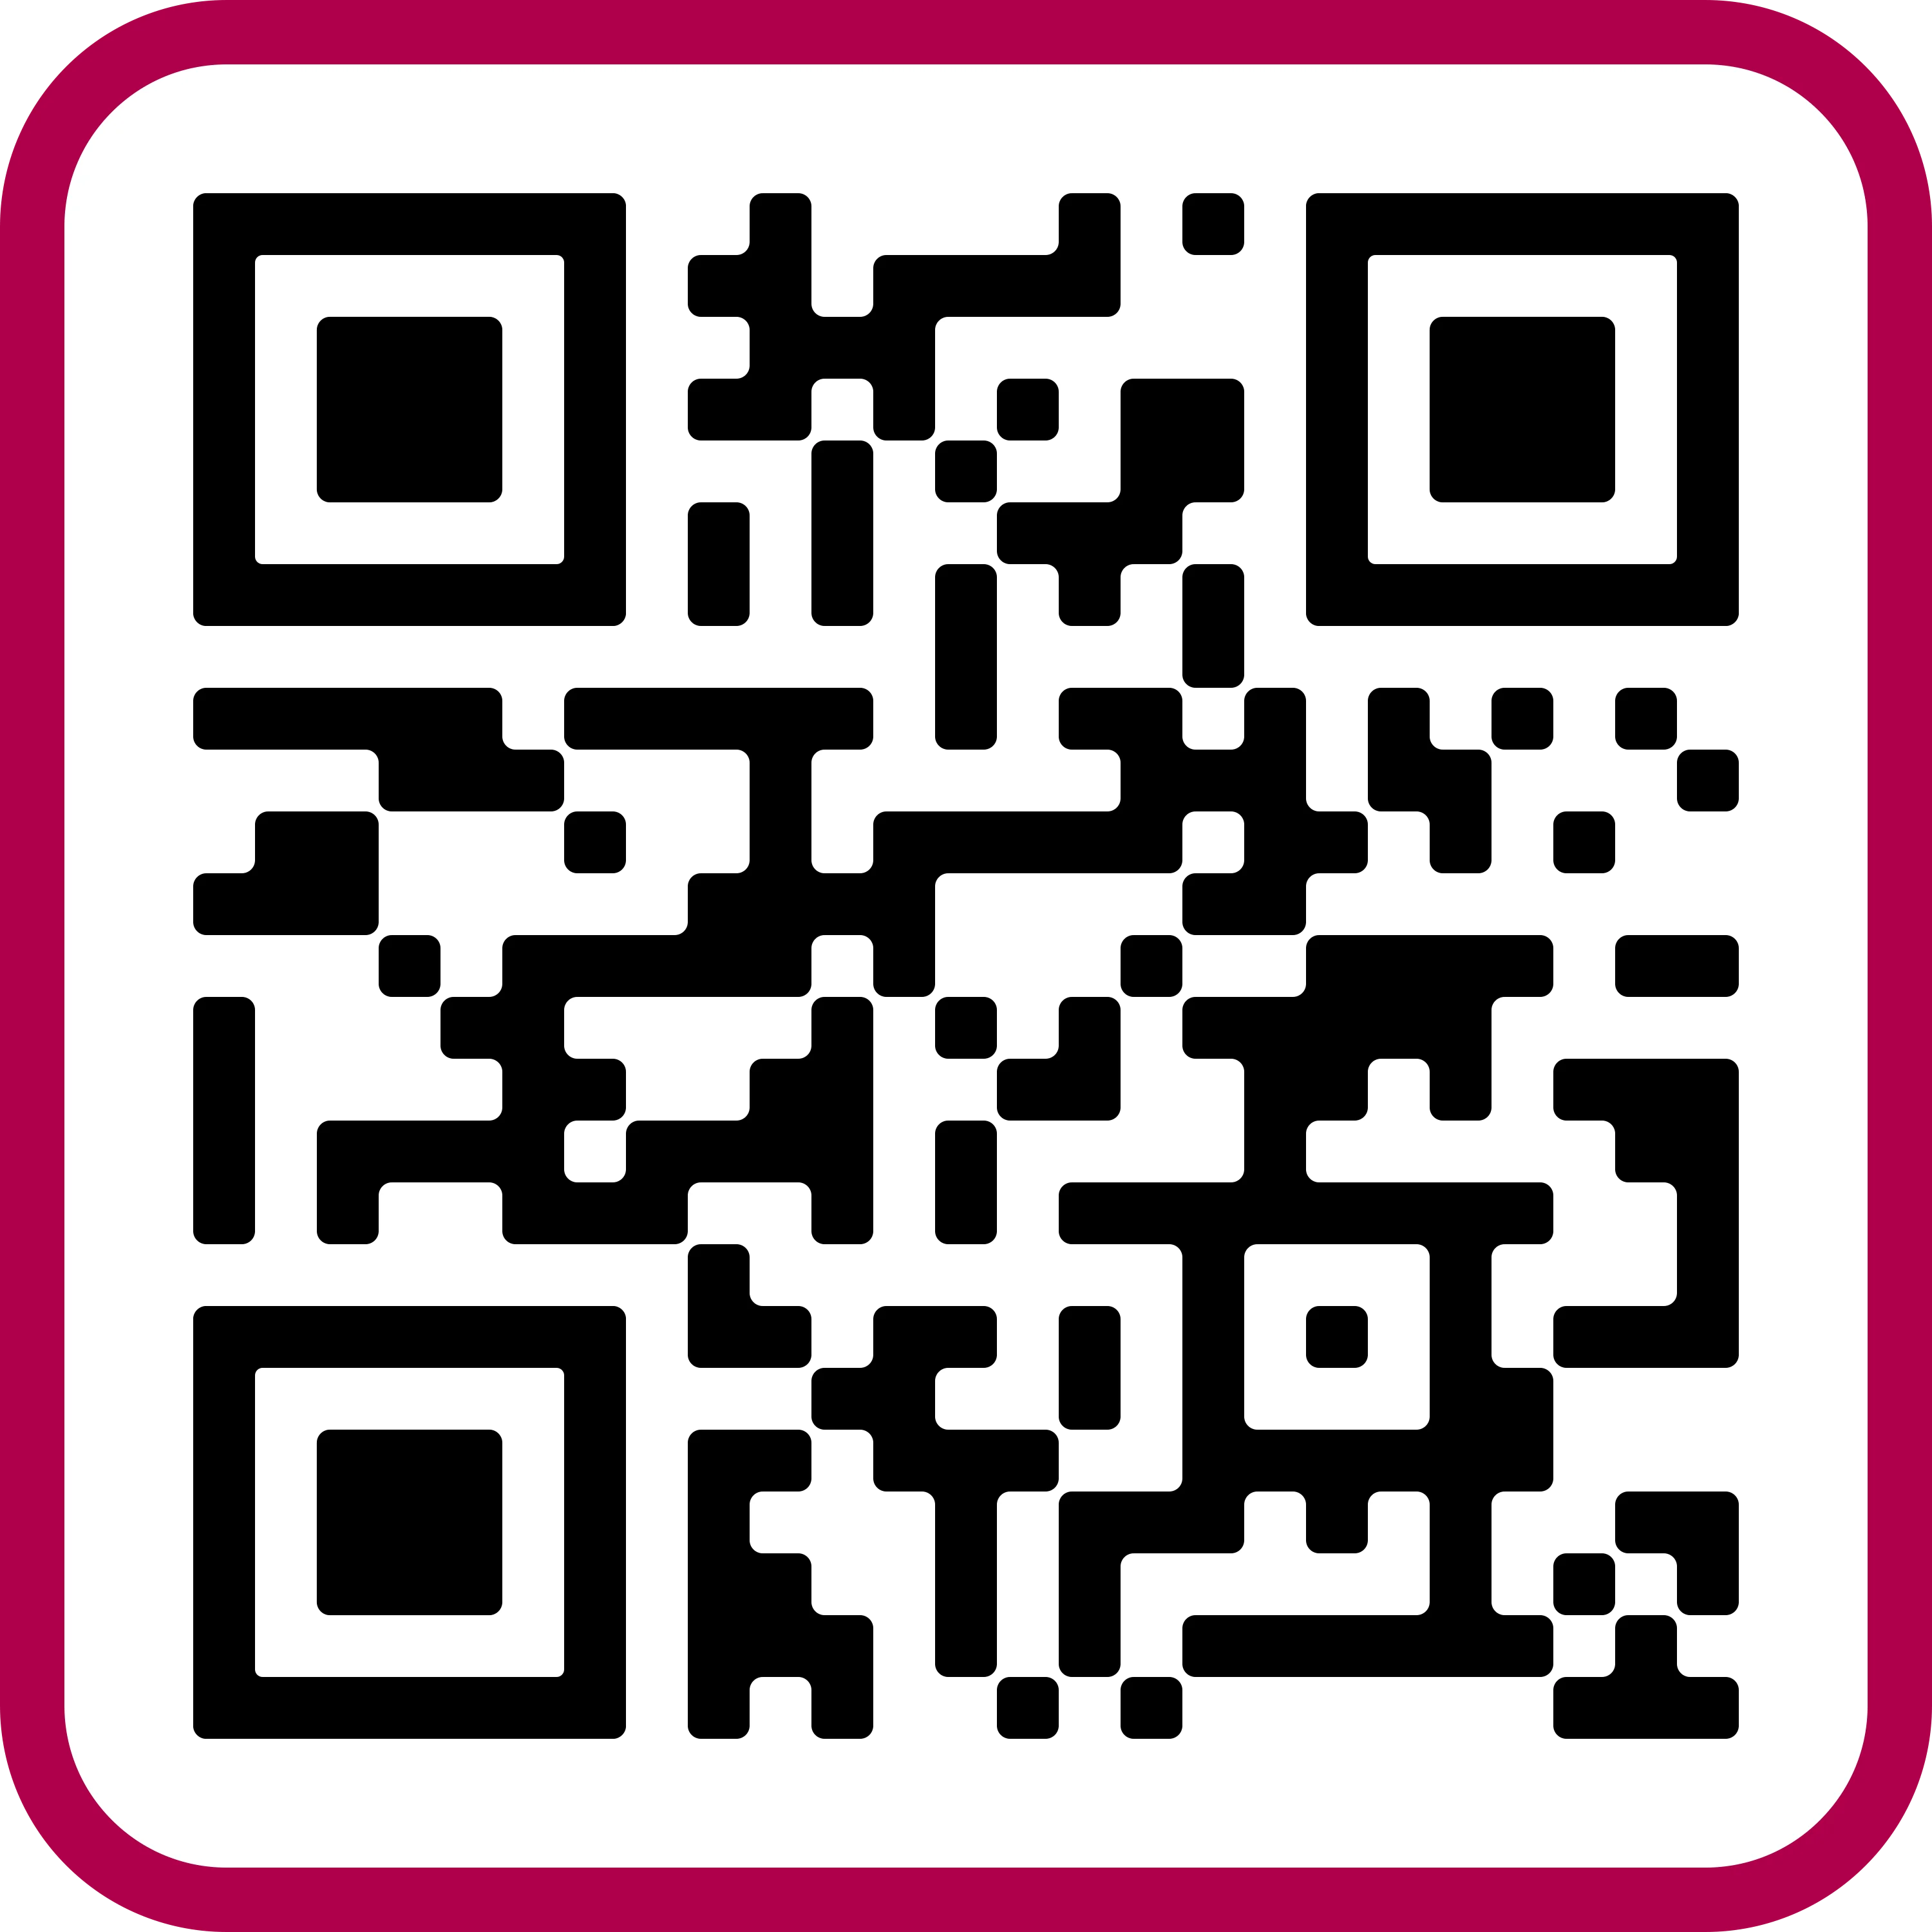 Download Hotlink Malaysia Mobile App QR Code